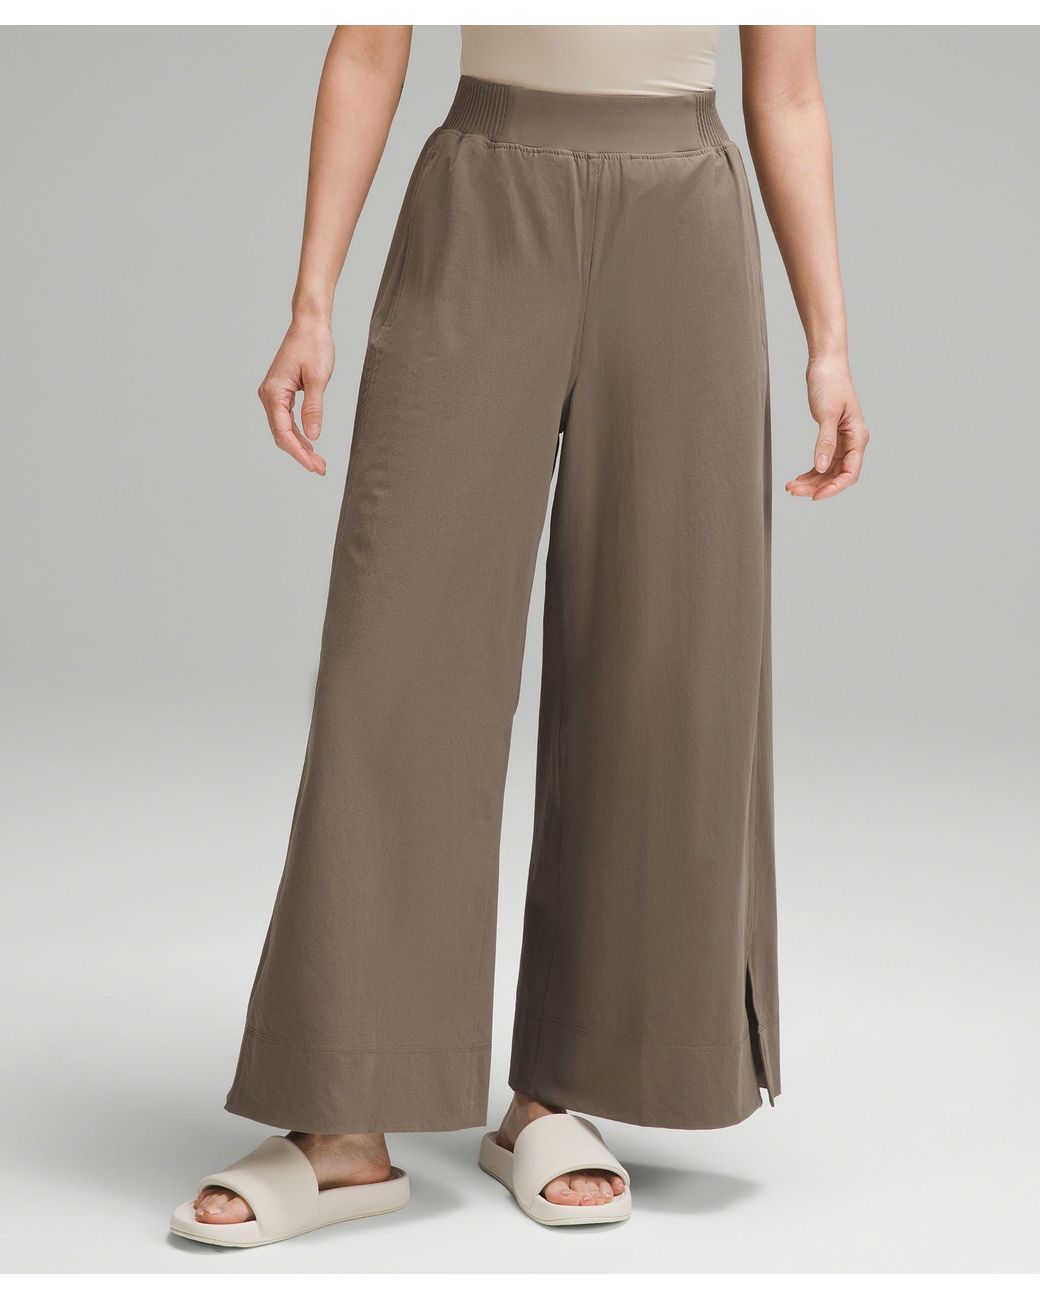 https://cdna.lystit.com/1040/1300/n/photos/lululemon/188779f3/lululemon-athletica-designer-Nomad-Stretch-Woven-High-rise-Wide-leg-Cropped-Pants-Color-Brown-Size-L.jpeg